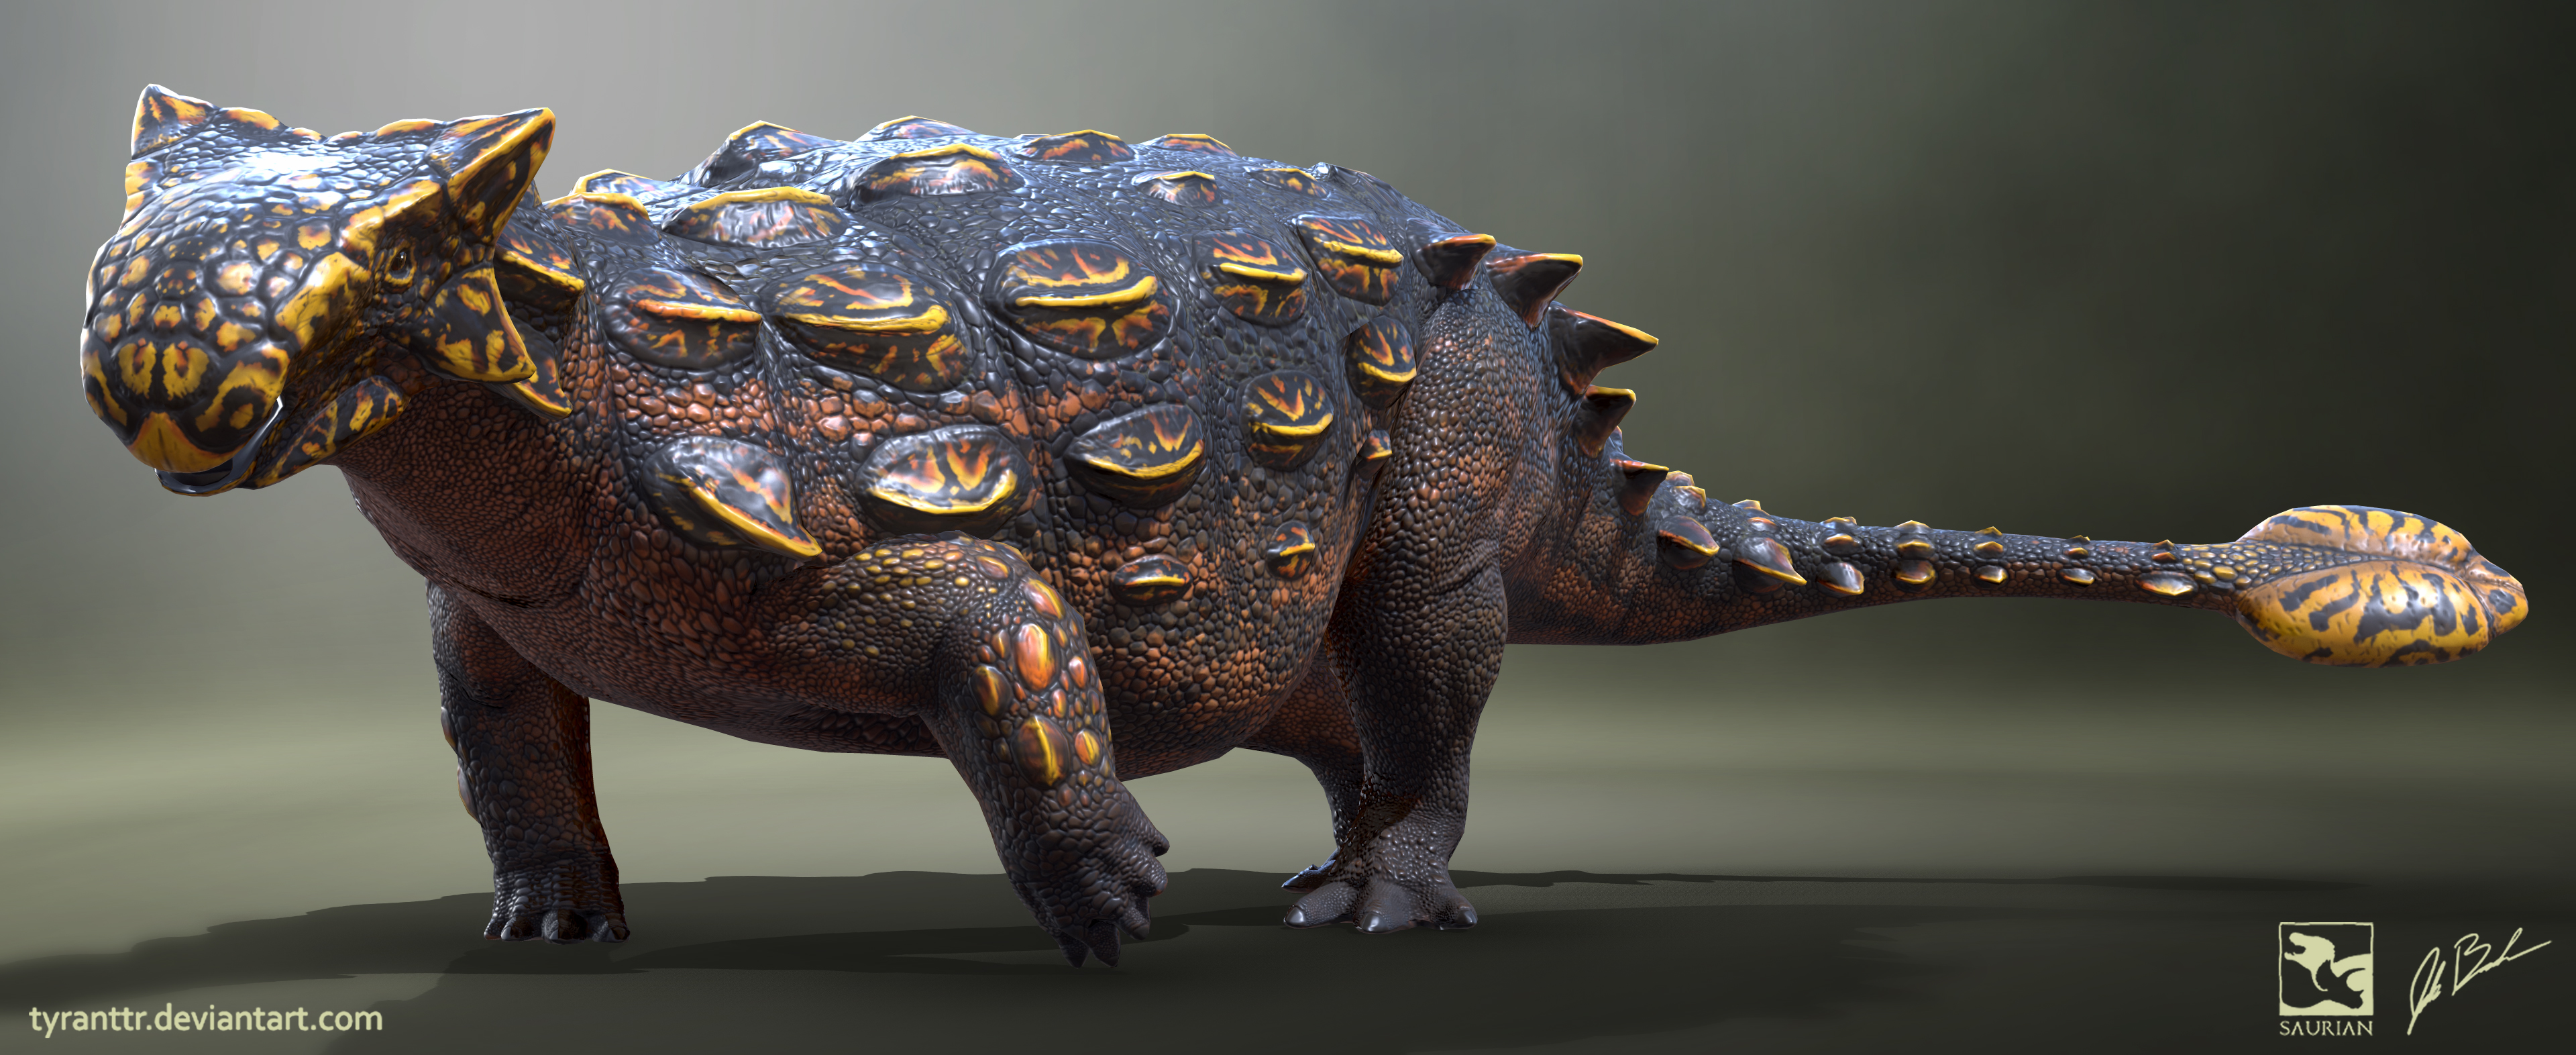 Ankylosaurus magniventris - Saurian